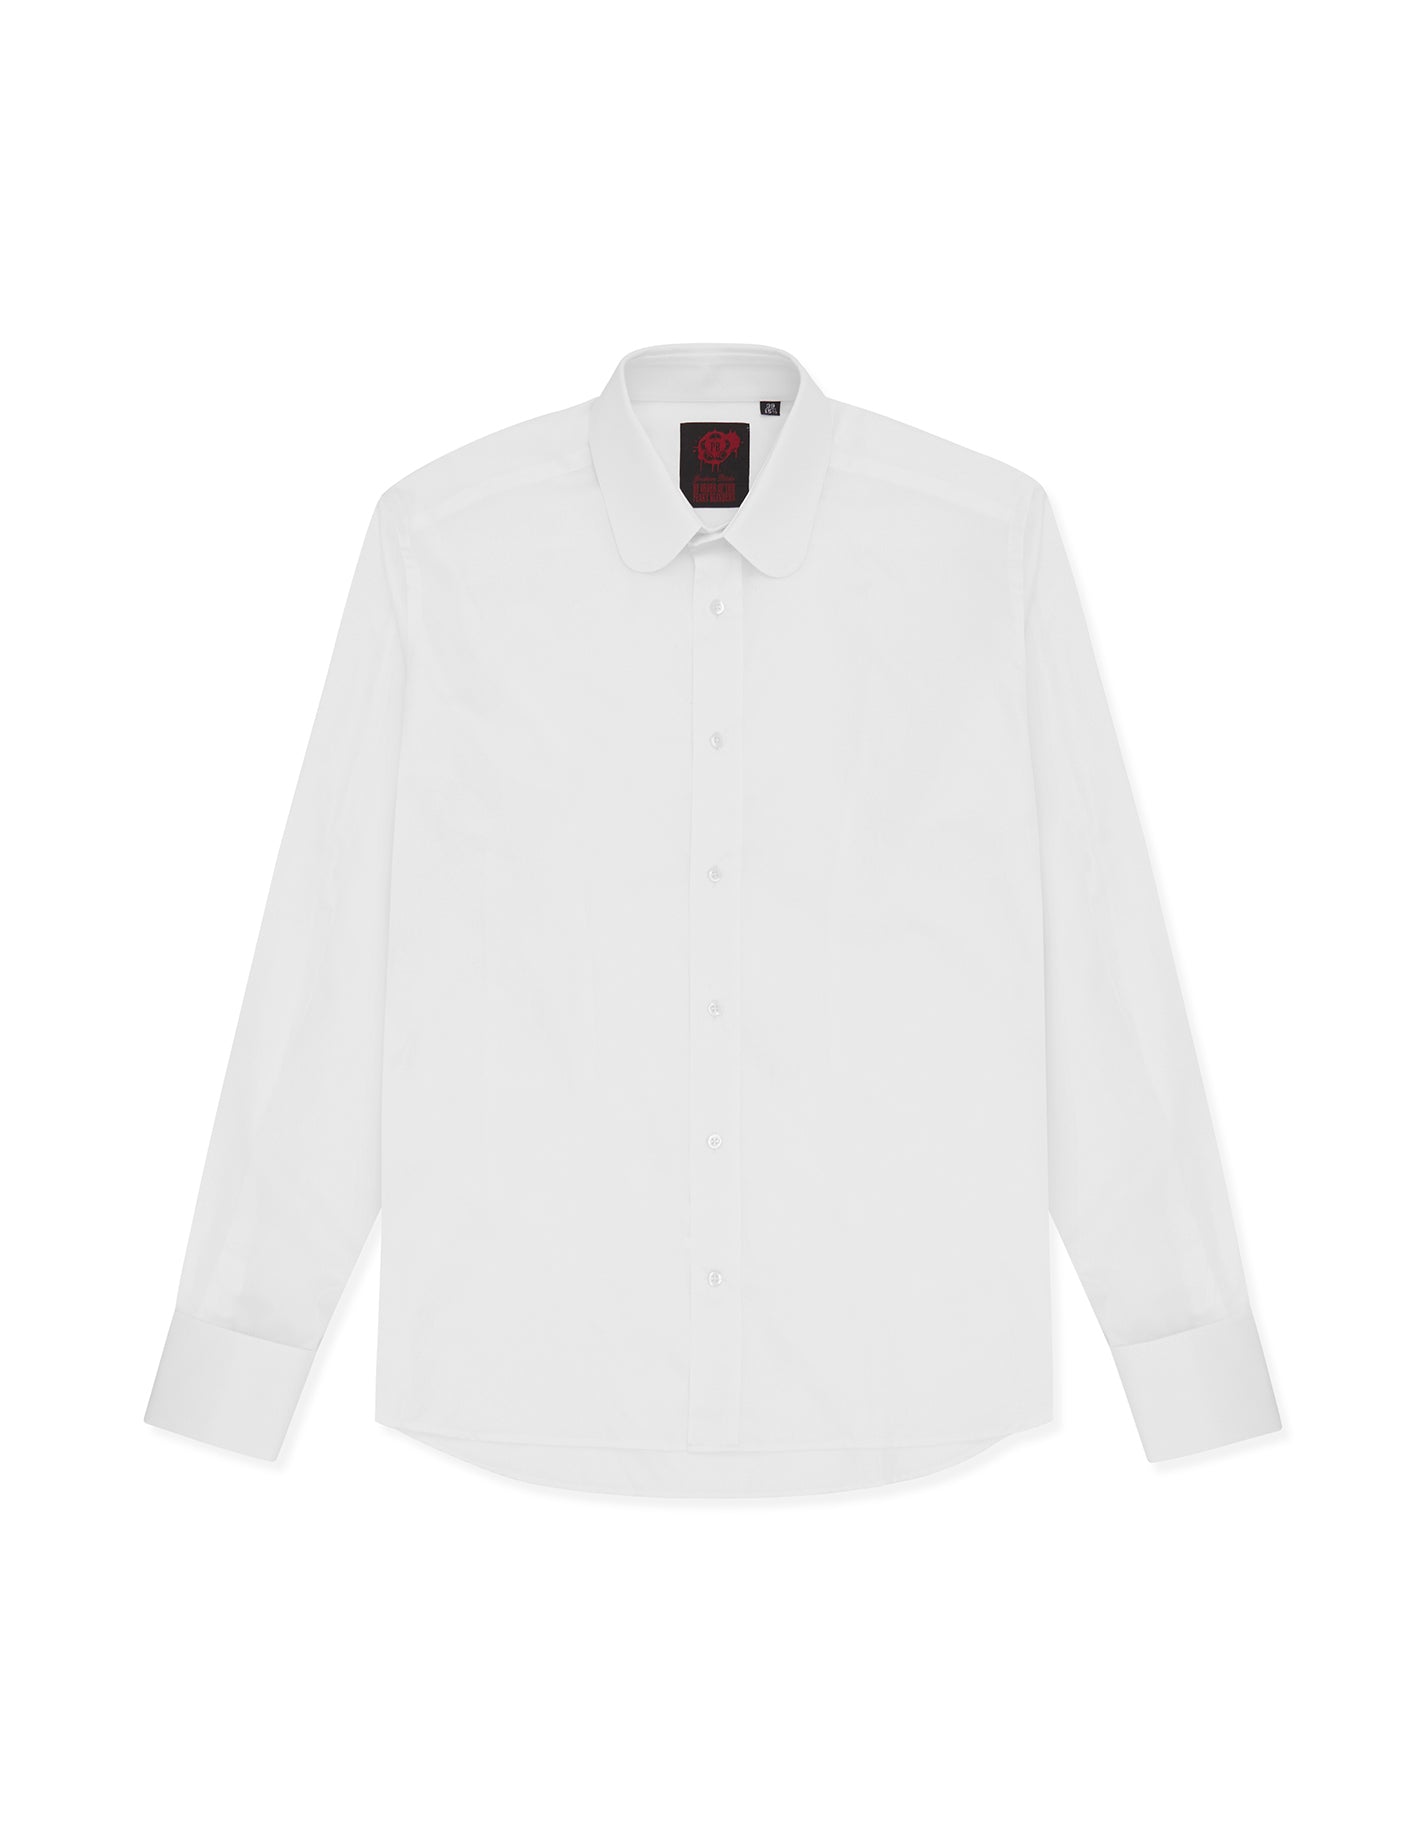 Peaky Binders - White Diamond Jacquard Shirt